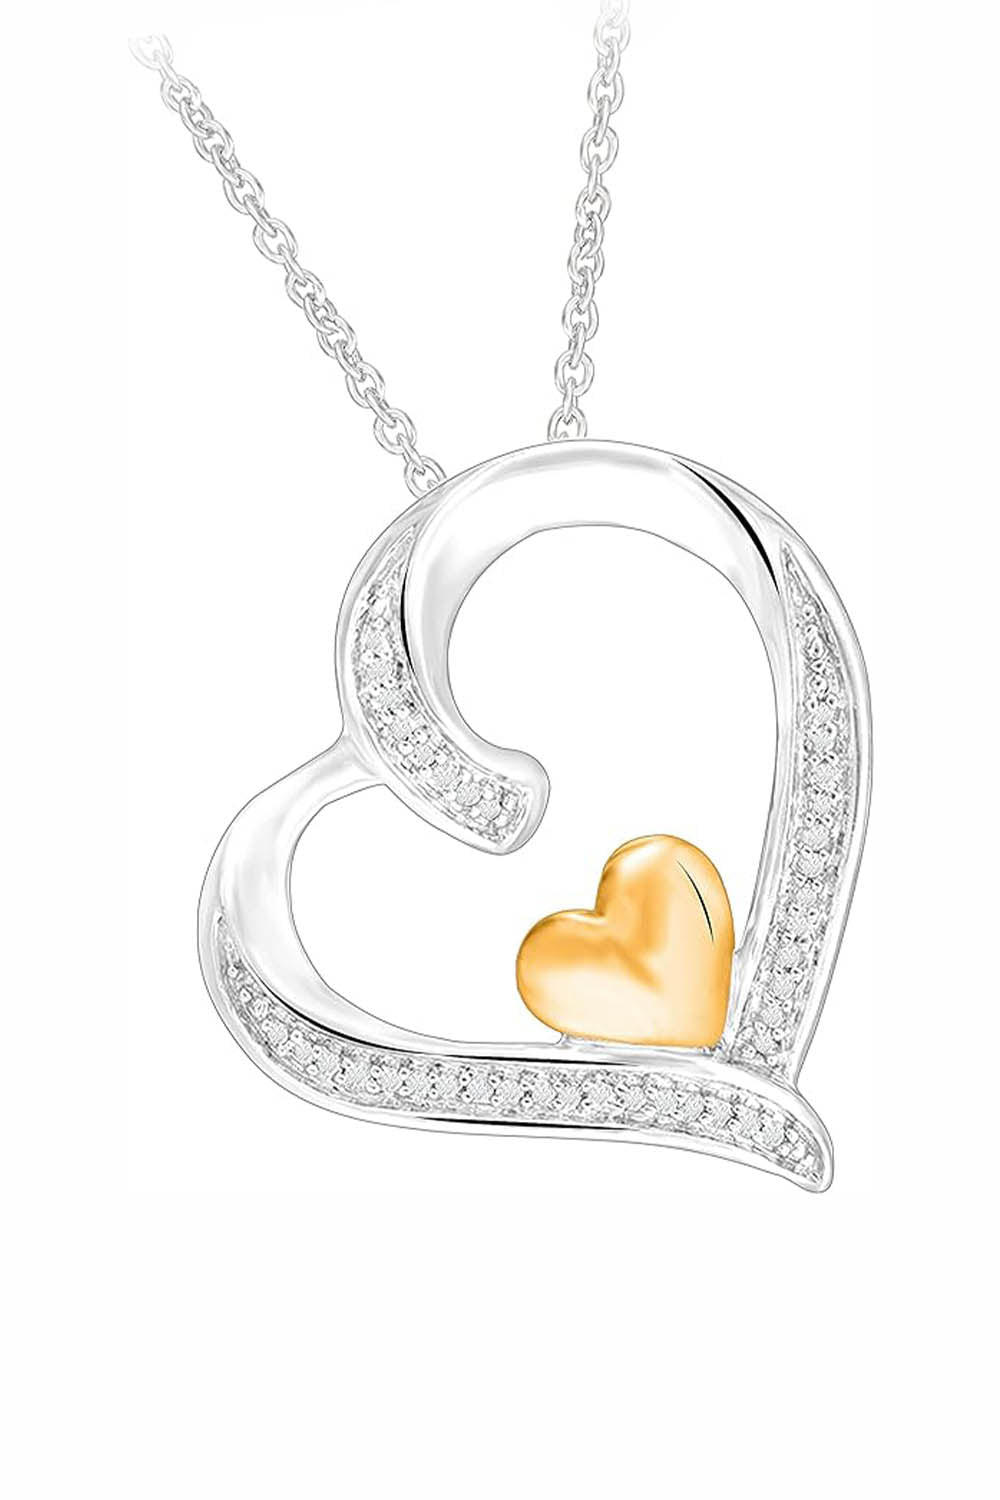 White Gold Color Latest Moissanite Double Love Heart Pendant Necklace 